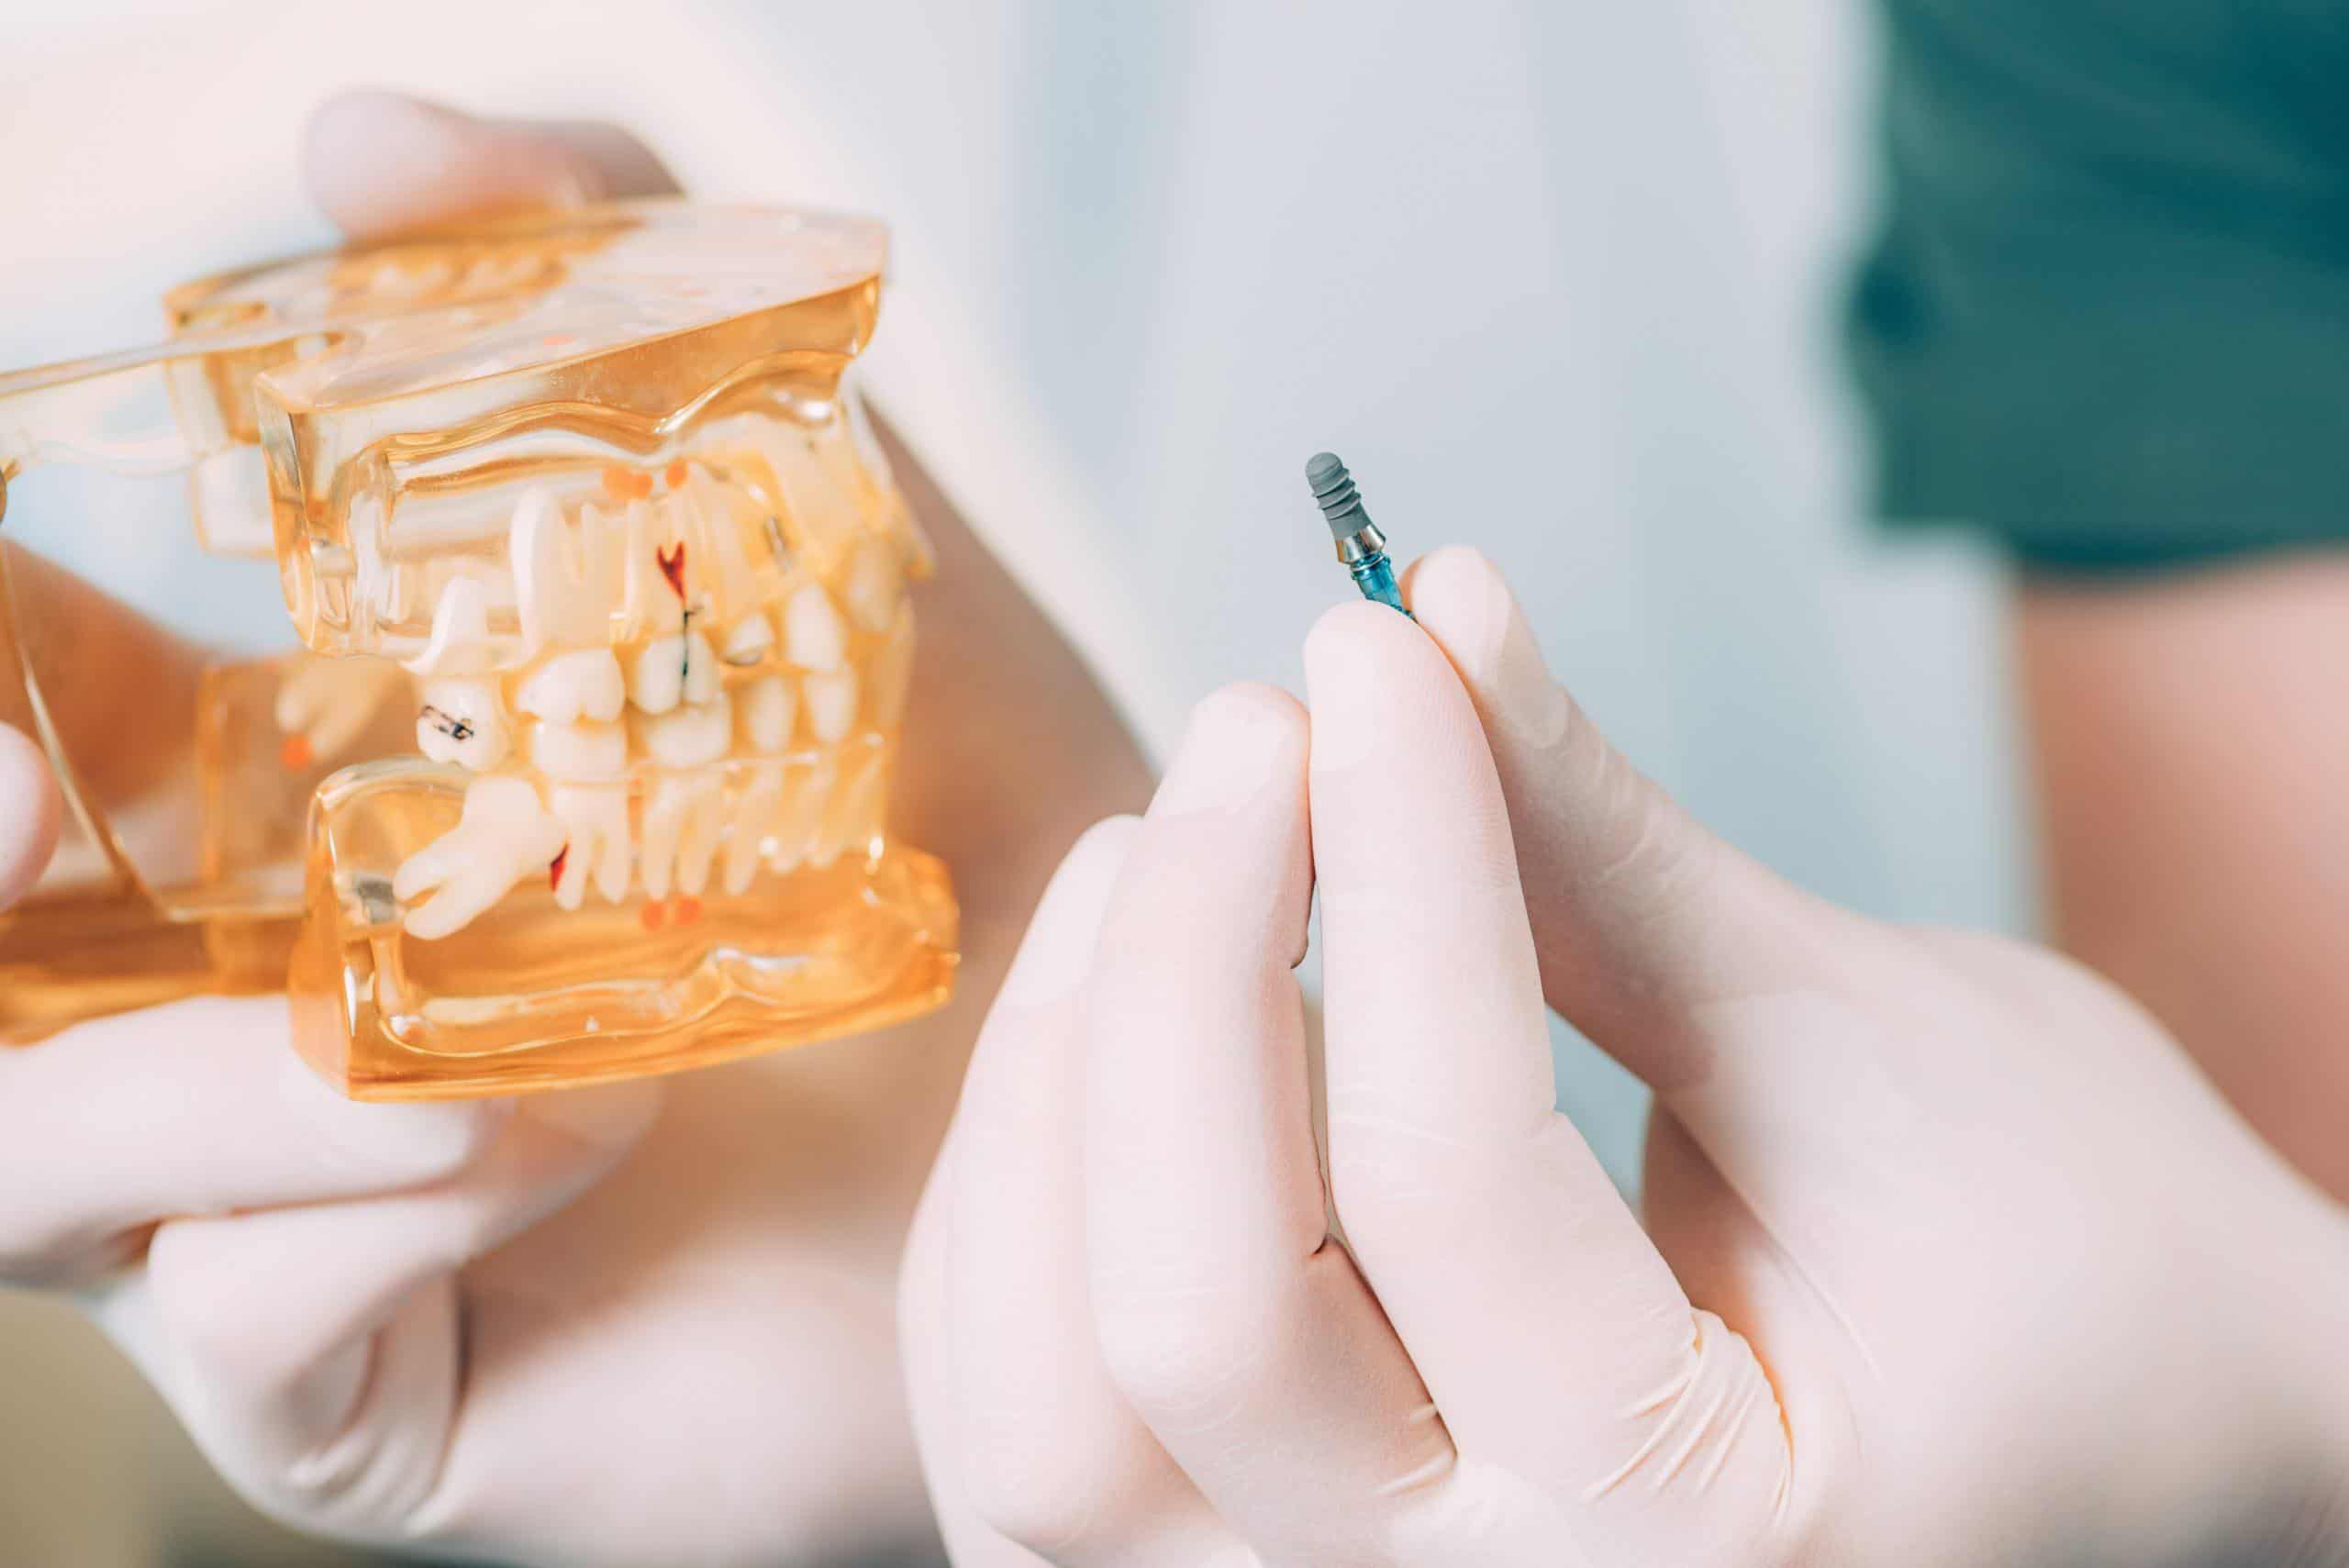 dental implants Singapore